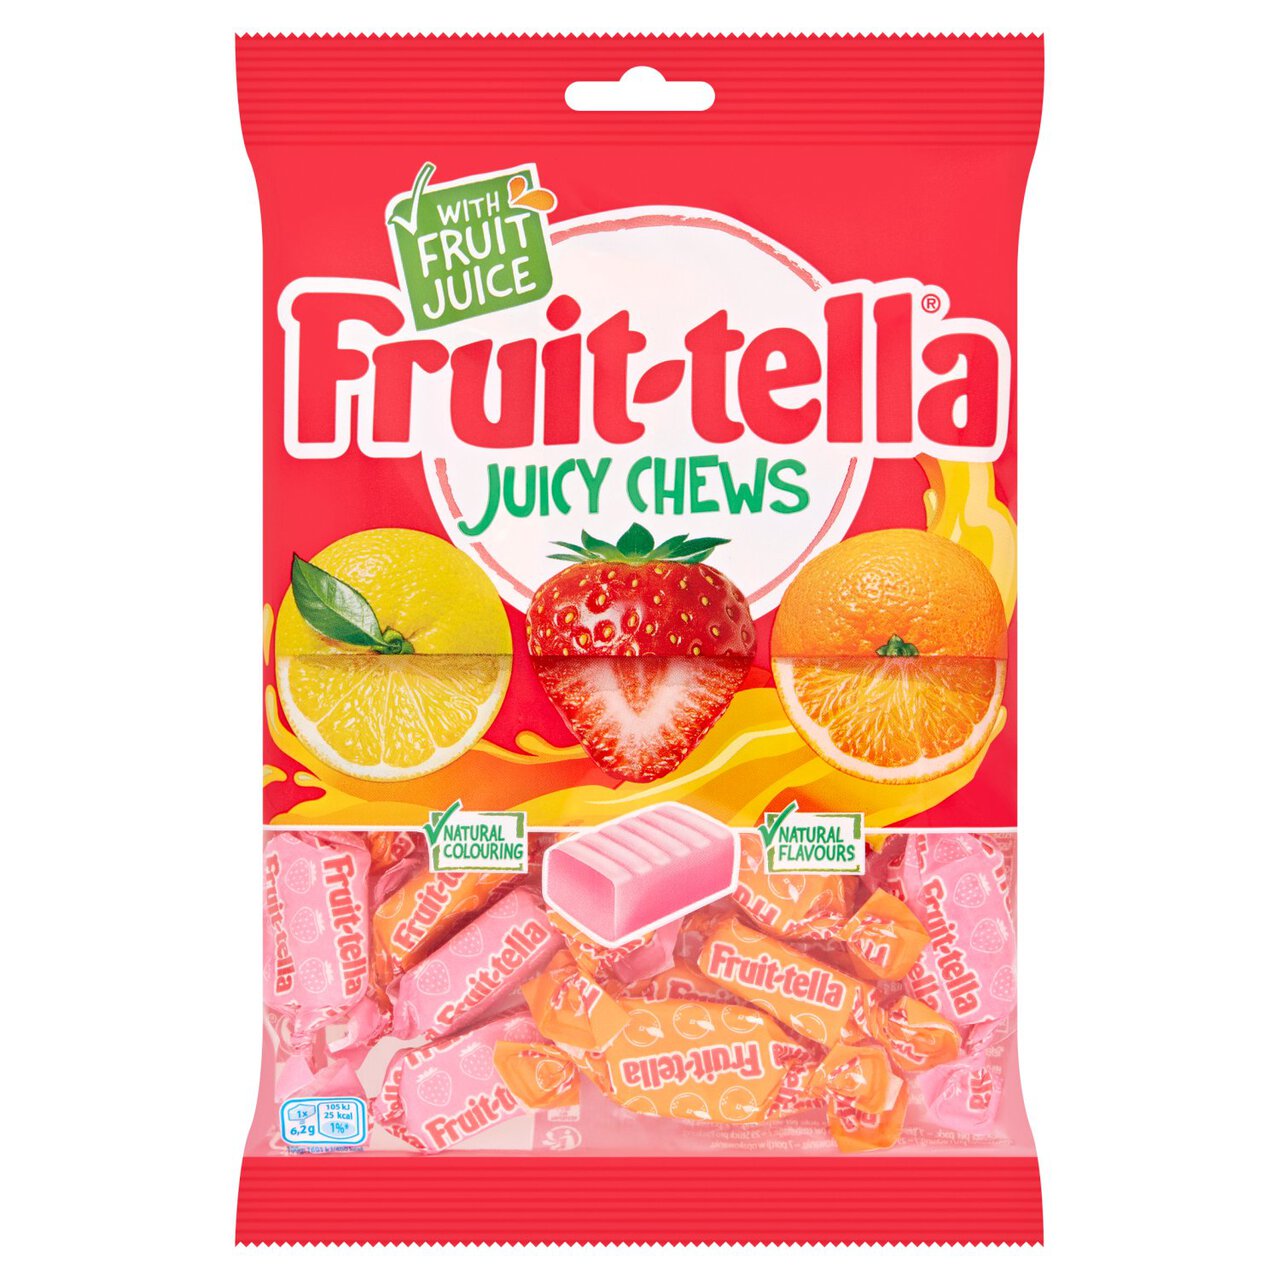 Fruittella Juicy Chews Sweets Sharing Bag 170g